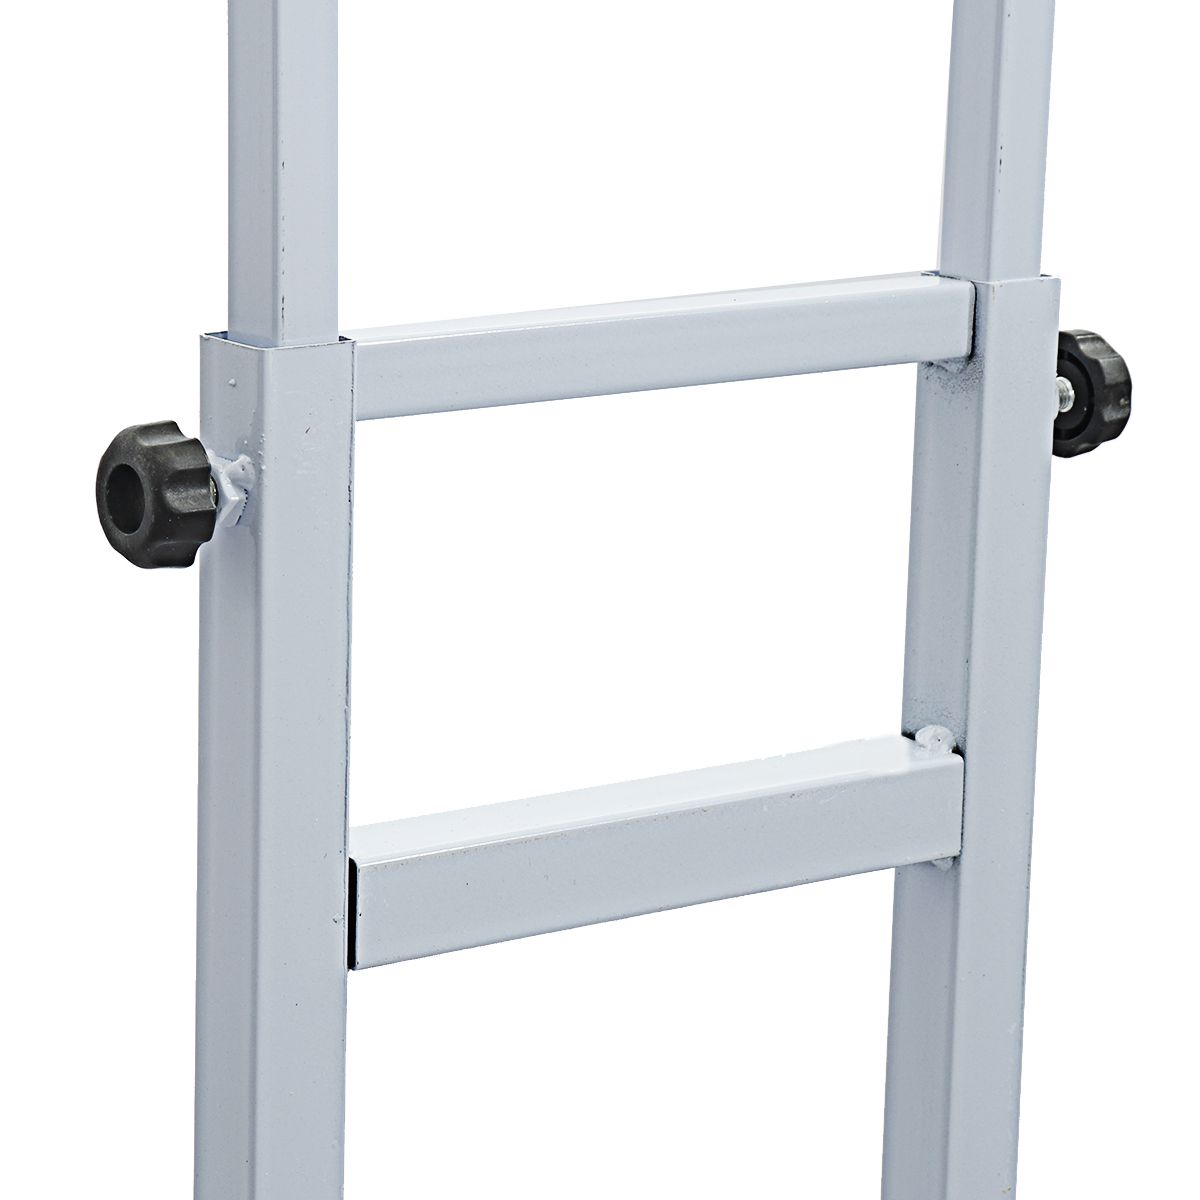 Adjustable-Two-sided-KT-Board-Poster-Stand-Shelf-Rack-1607495